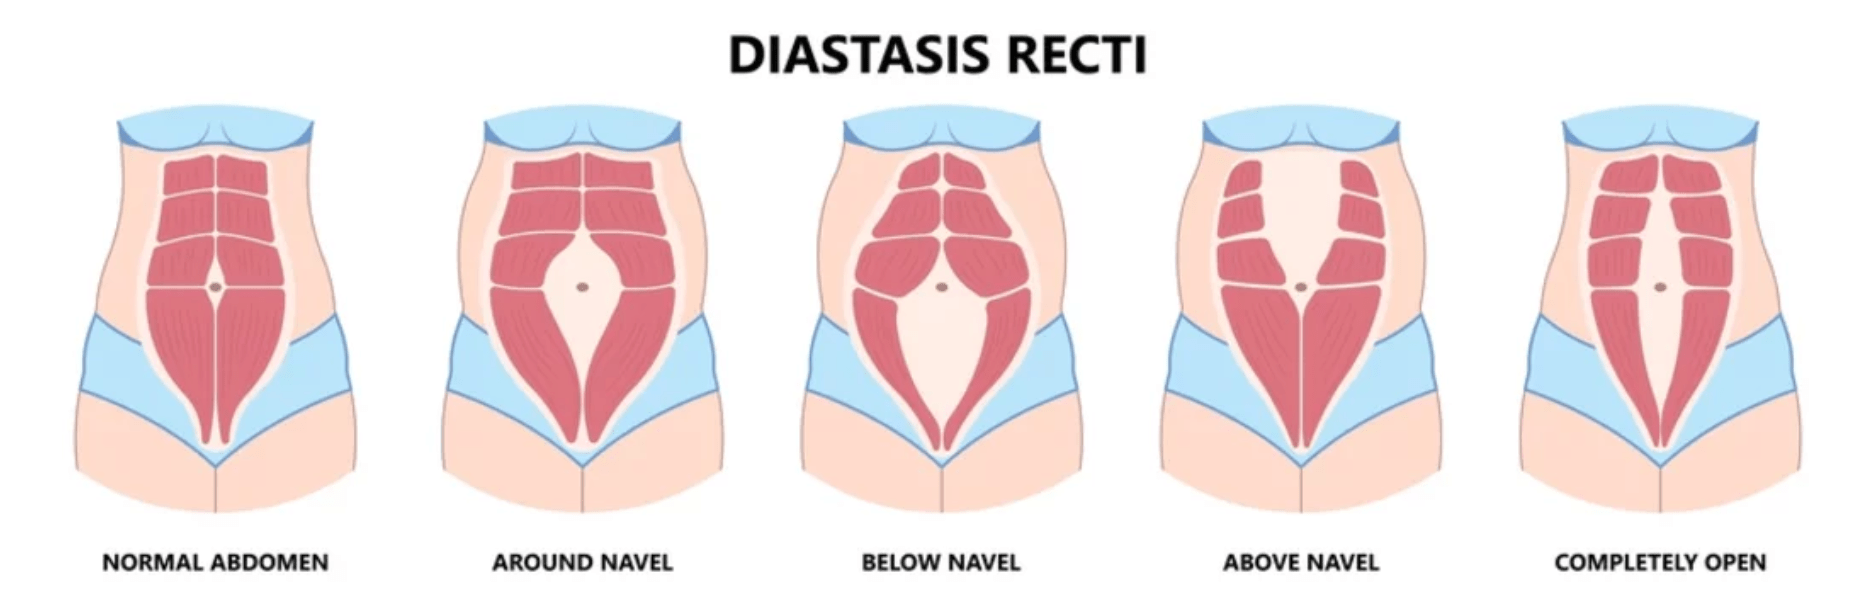 Diastasis Recti (Abdominal Separation) image